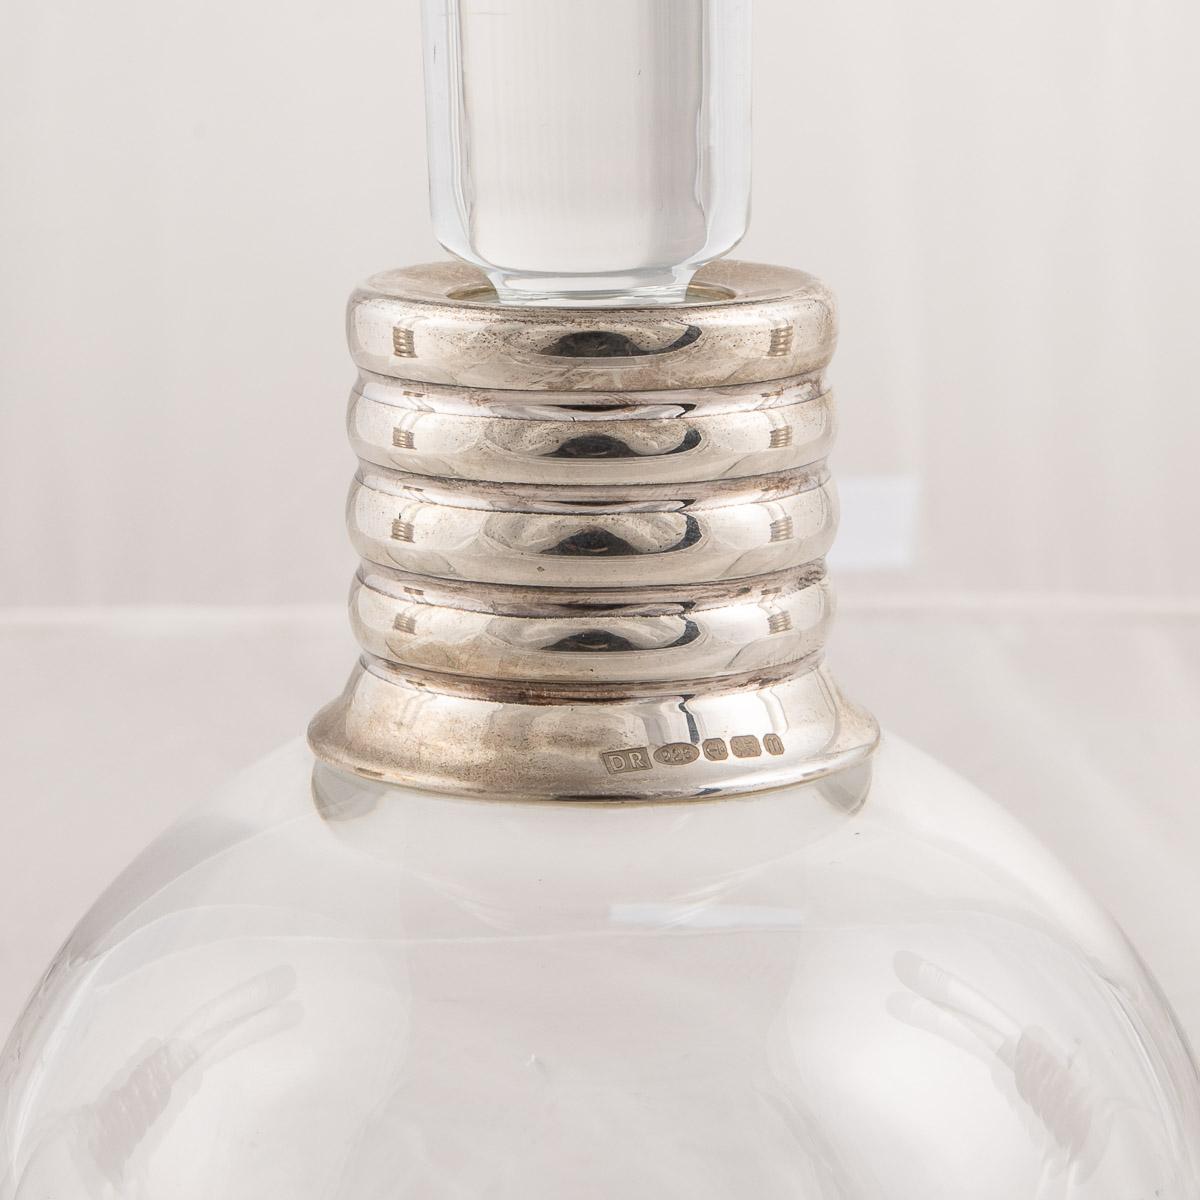 British Modern Set of Solid Silver & Glass Decanters, David Redman, C.2011